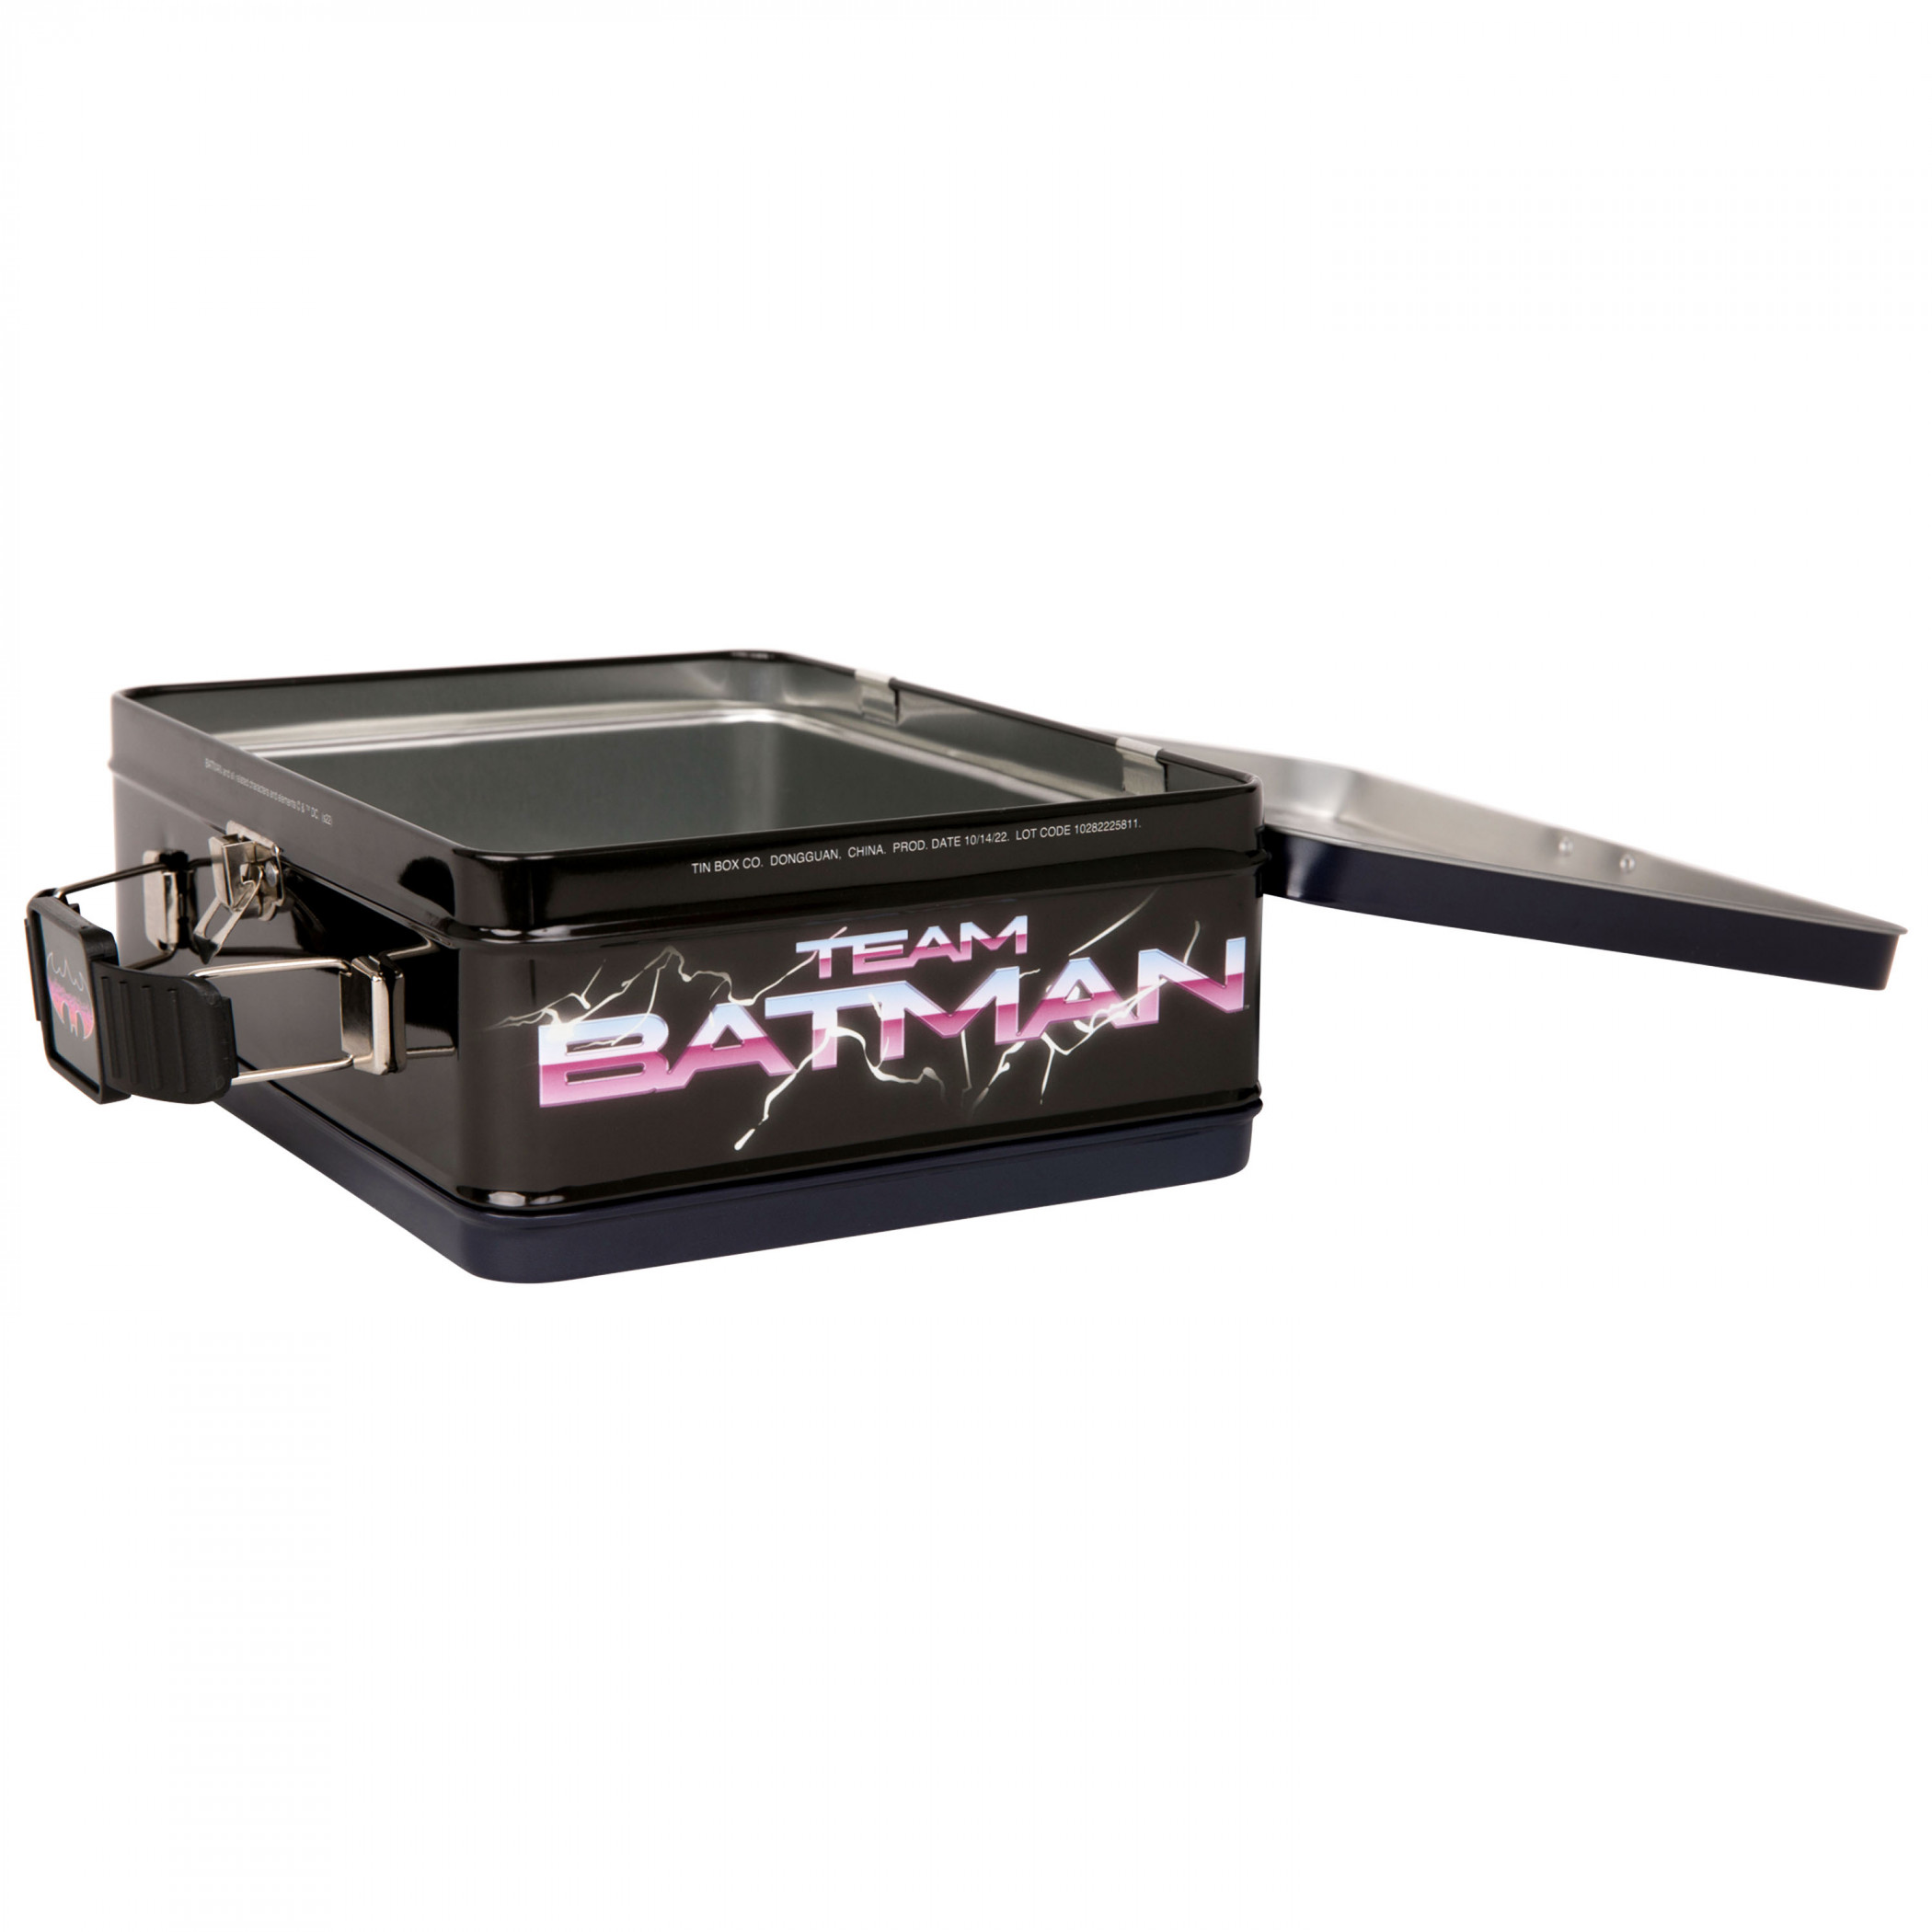 Batman Neon Outrun Tin Lunchbox